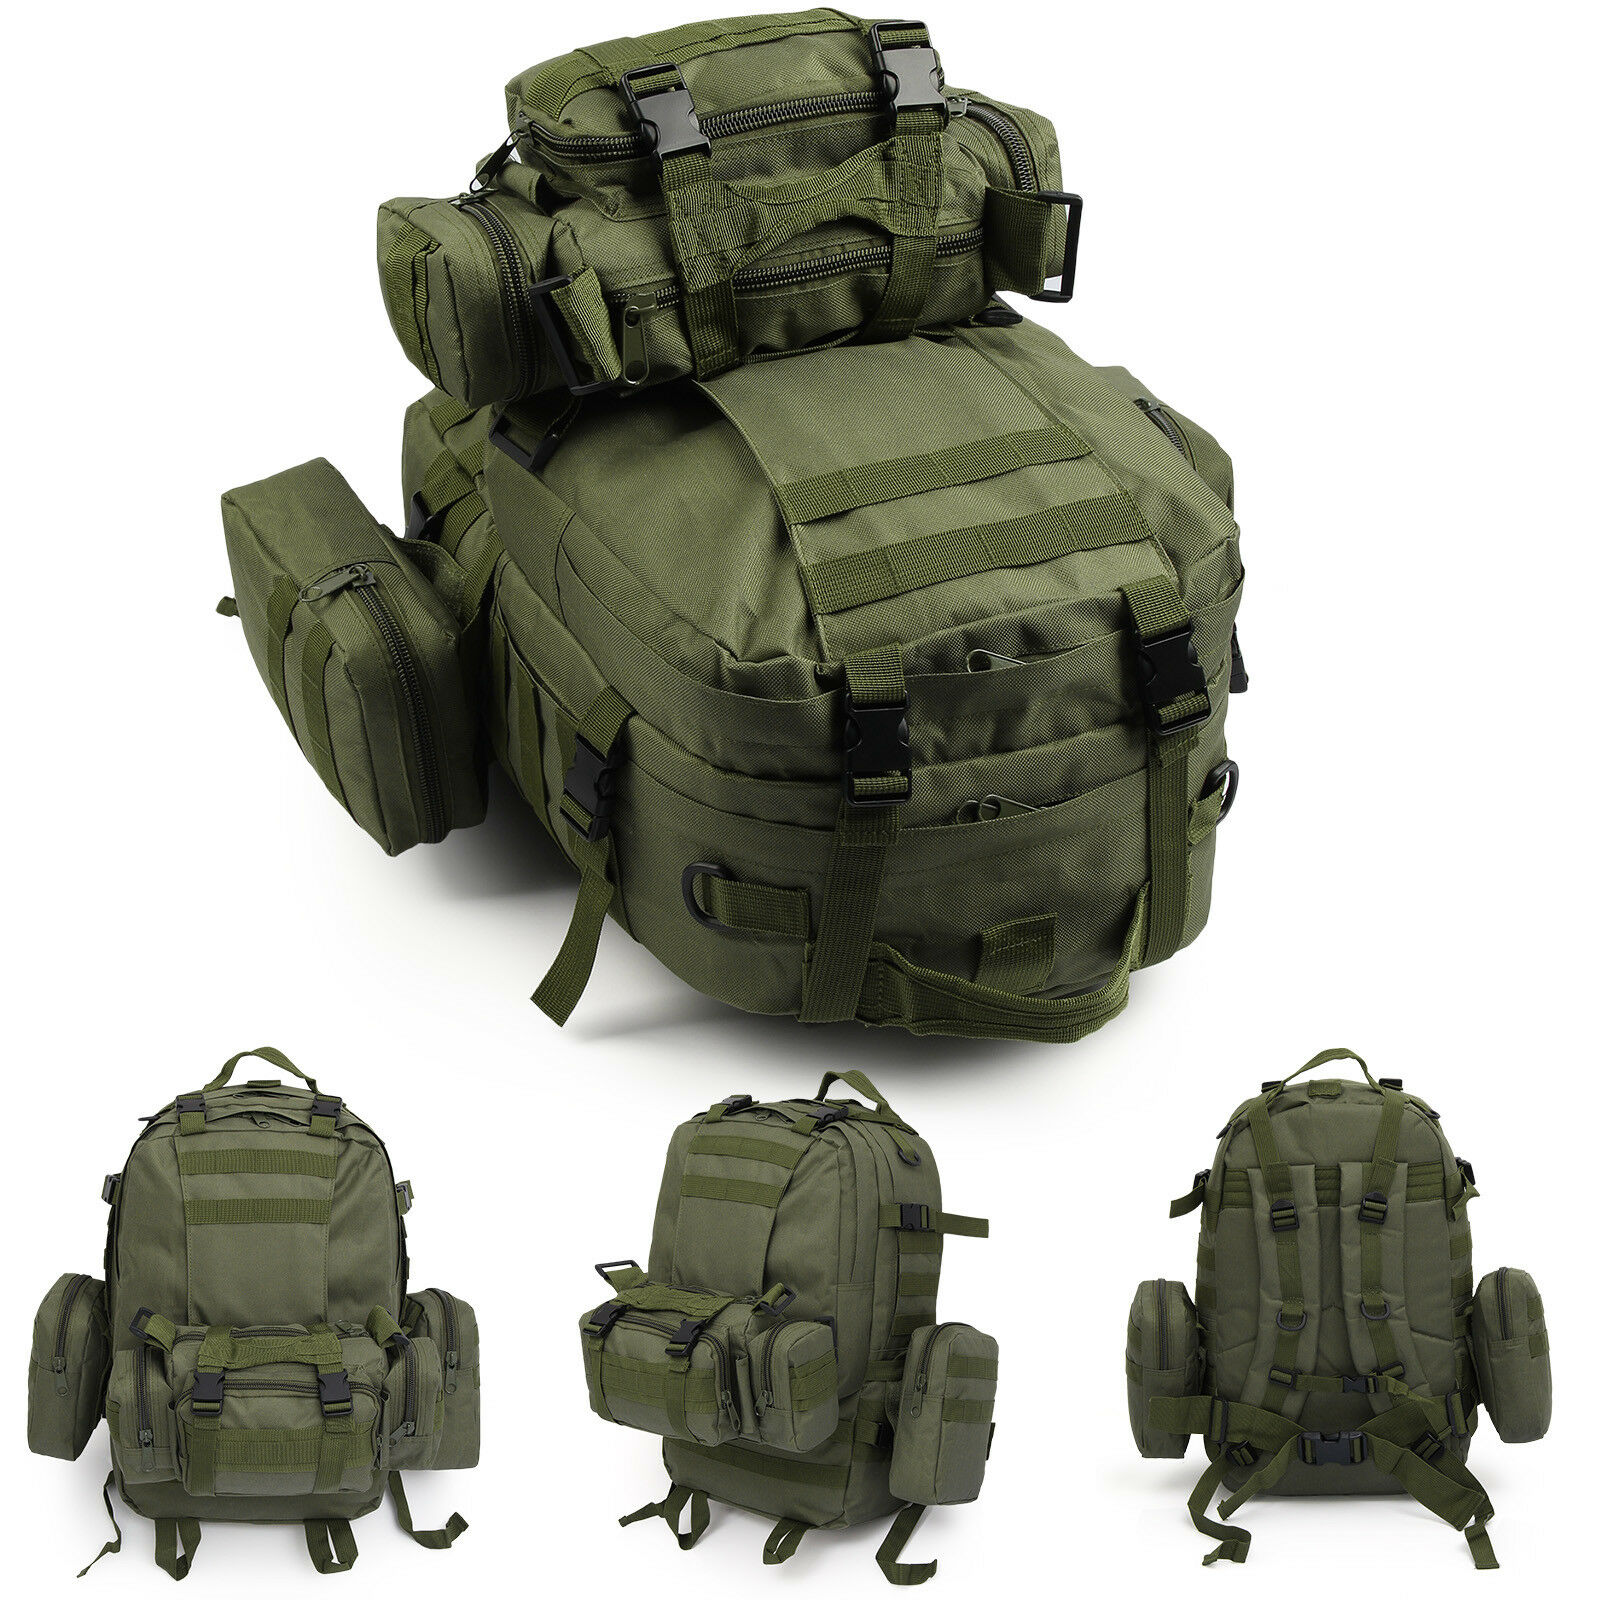 Green 50L Modern Military Tactical Army Rucksacks Molle Backpack Camping Hiking Bag